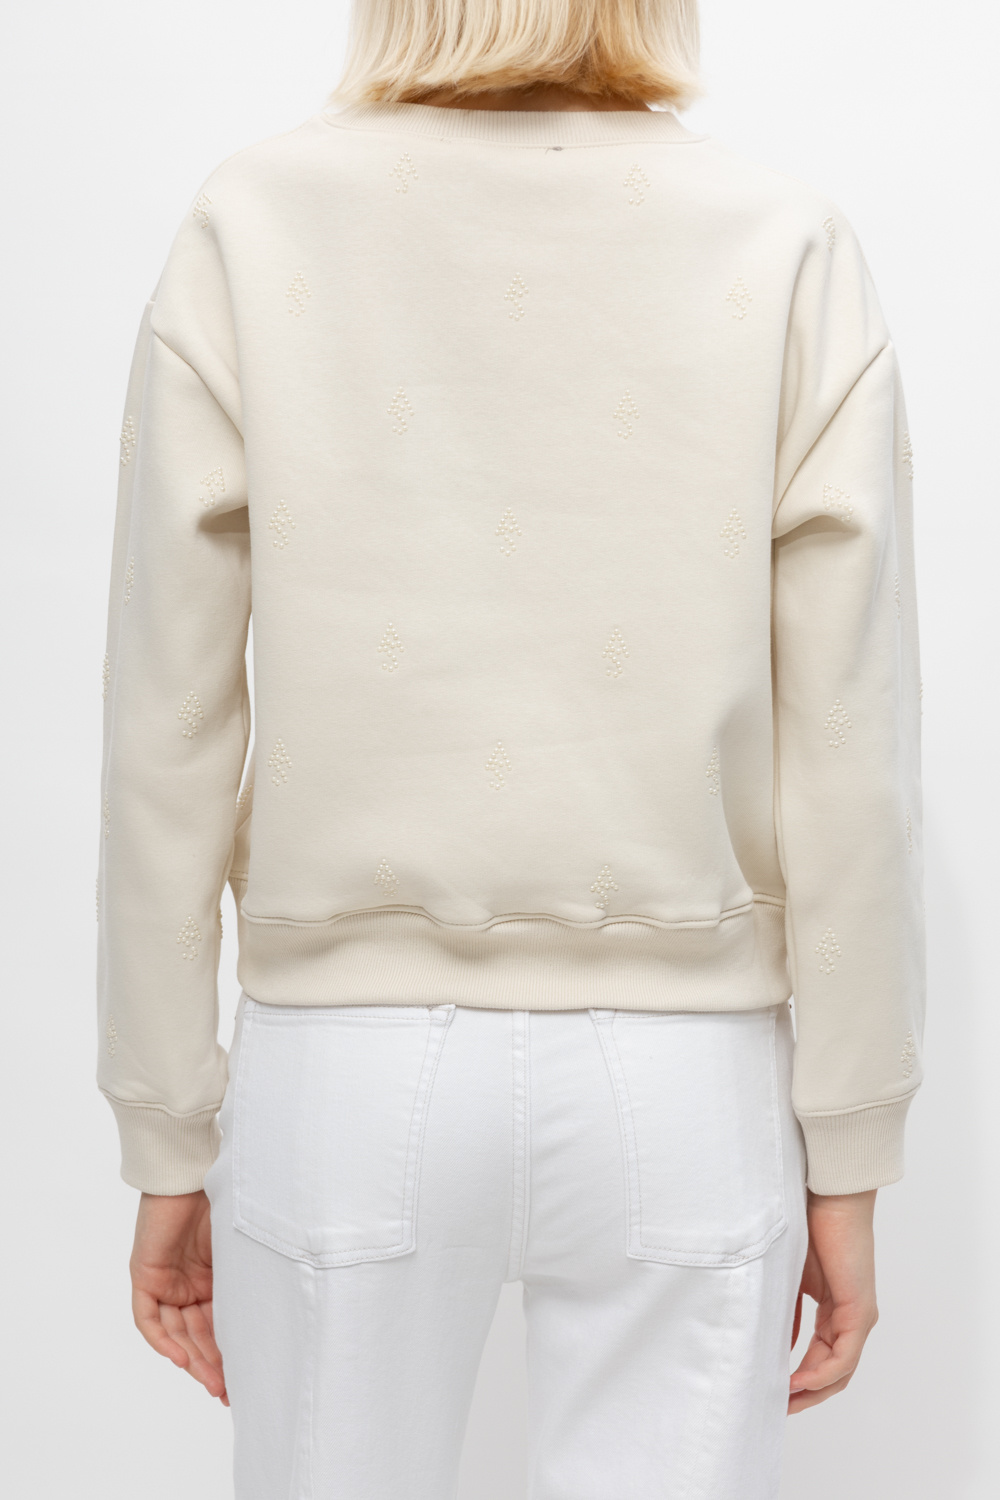 AllSaints ‘Pippa’ sweatshirt